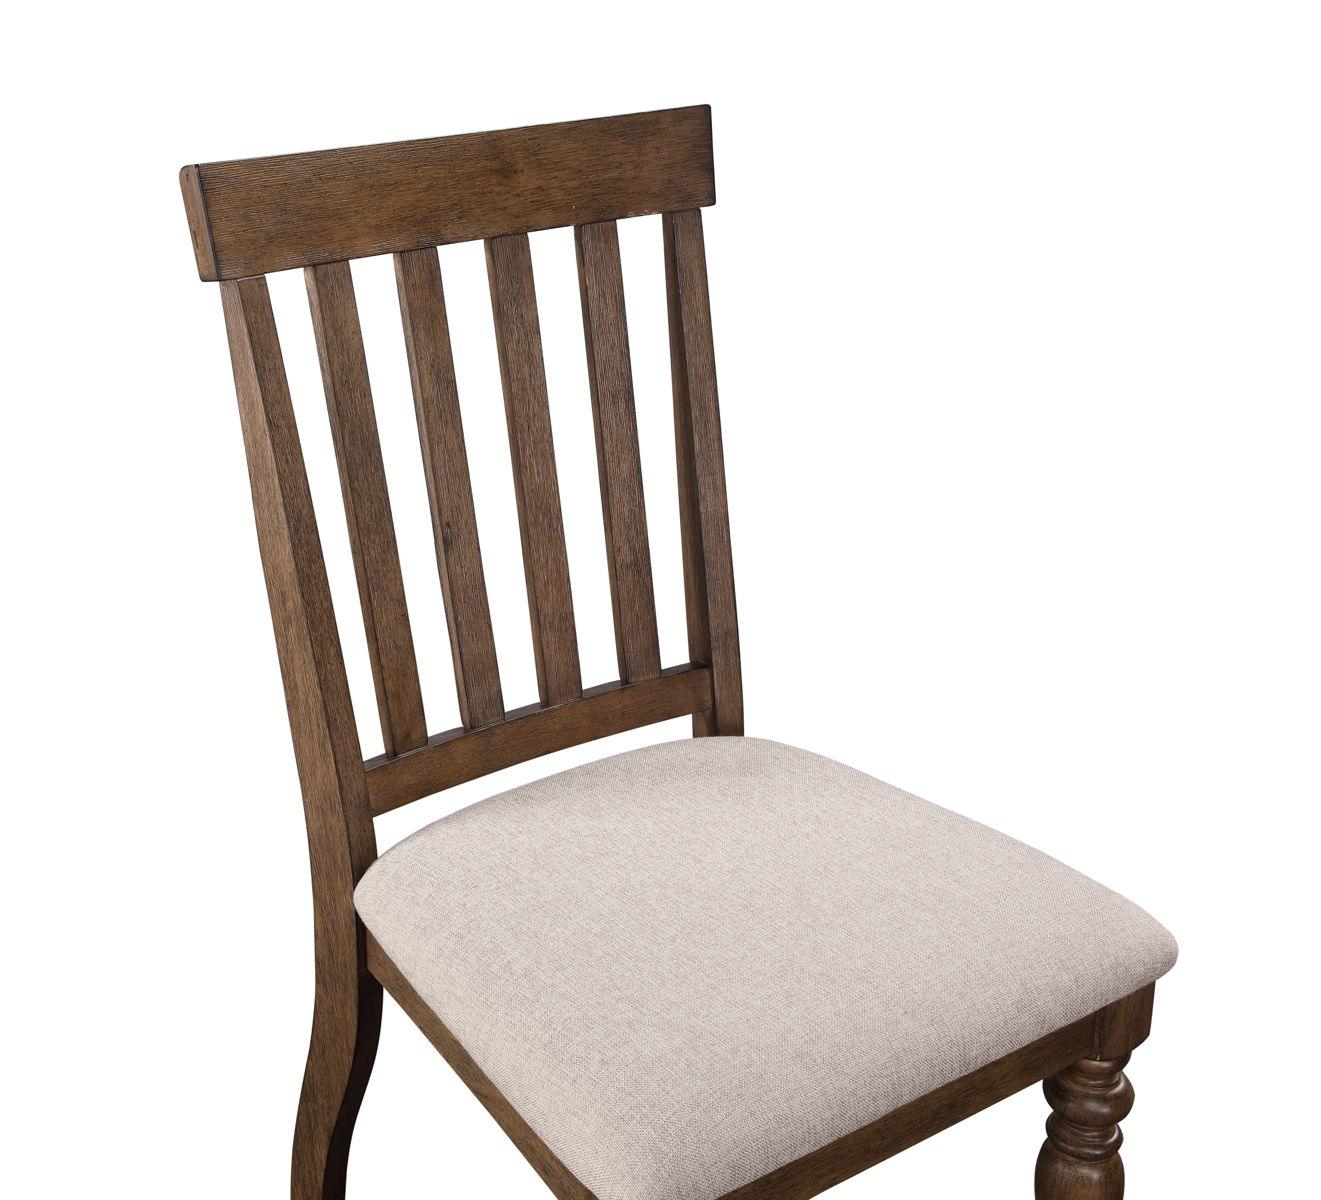 Steve Silver Furniture - Joanna - Side Chair (Set of 2) - Brown - 5th Avenue Furniture